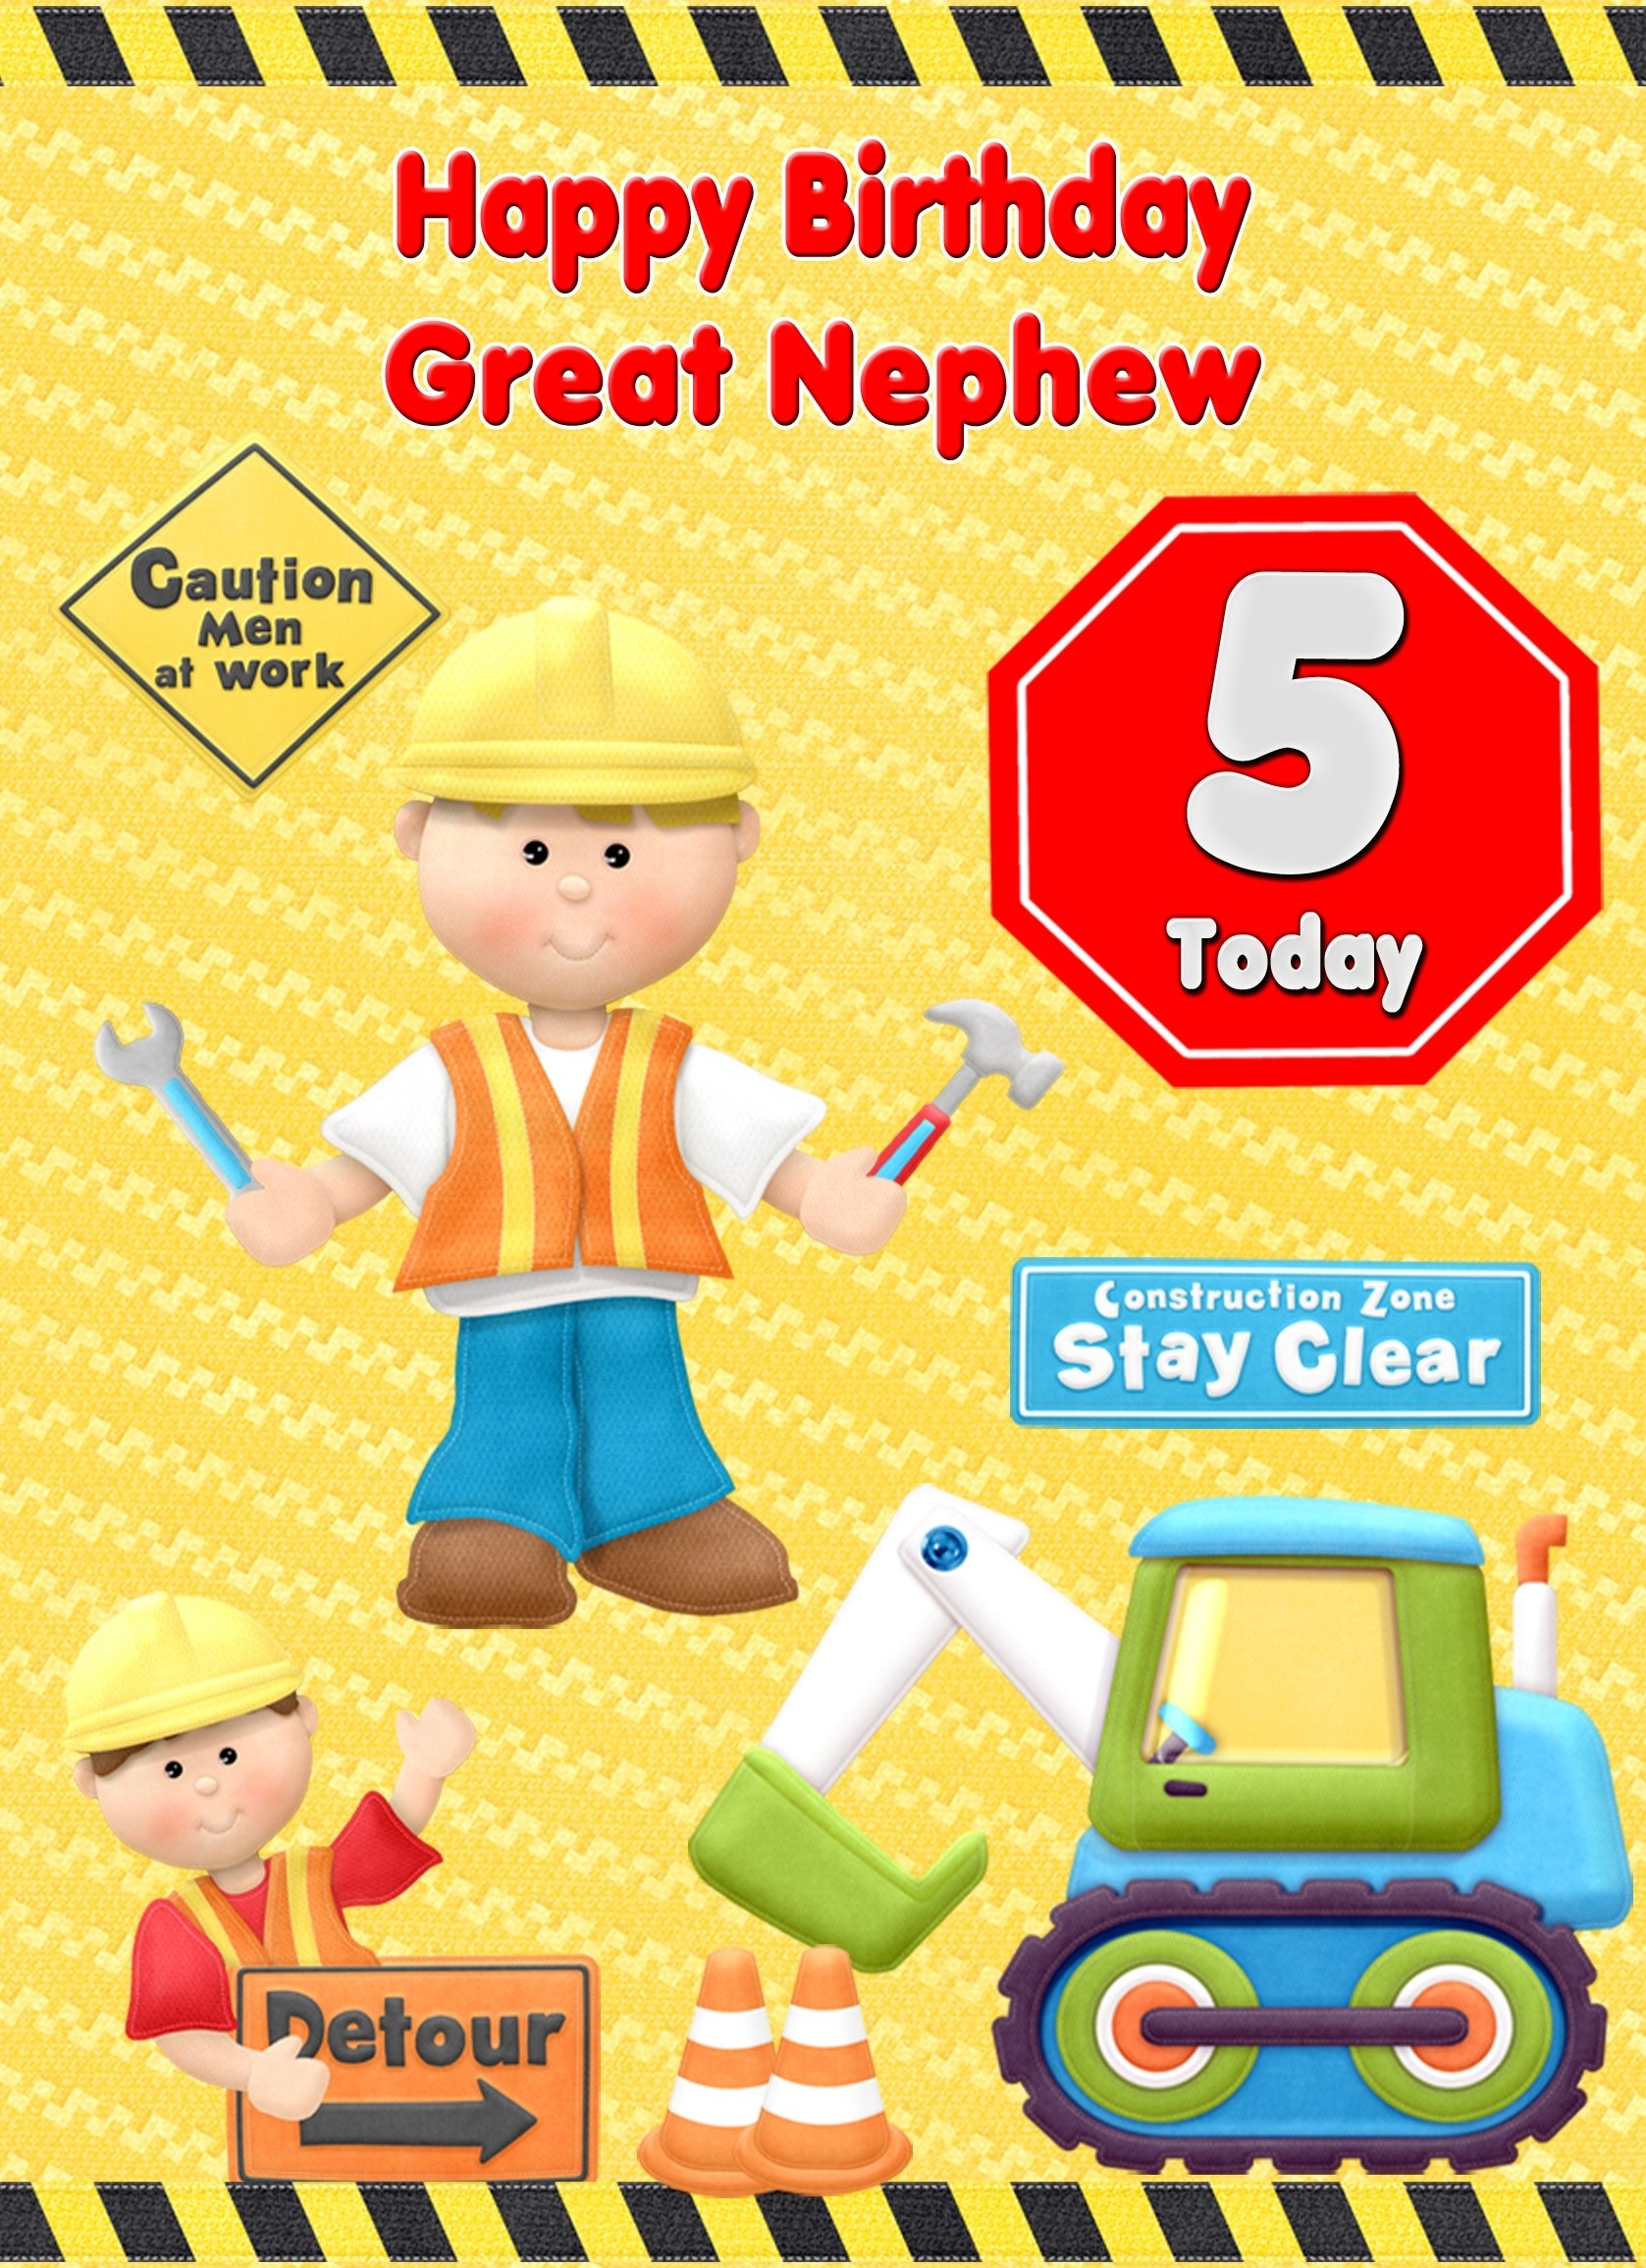 Kids 5th Birthday Builder Cartoon Card for Great Nephew